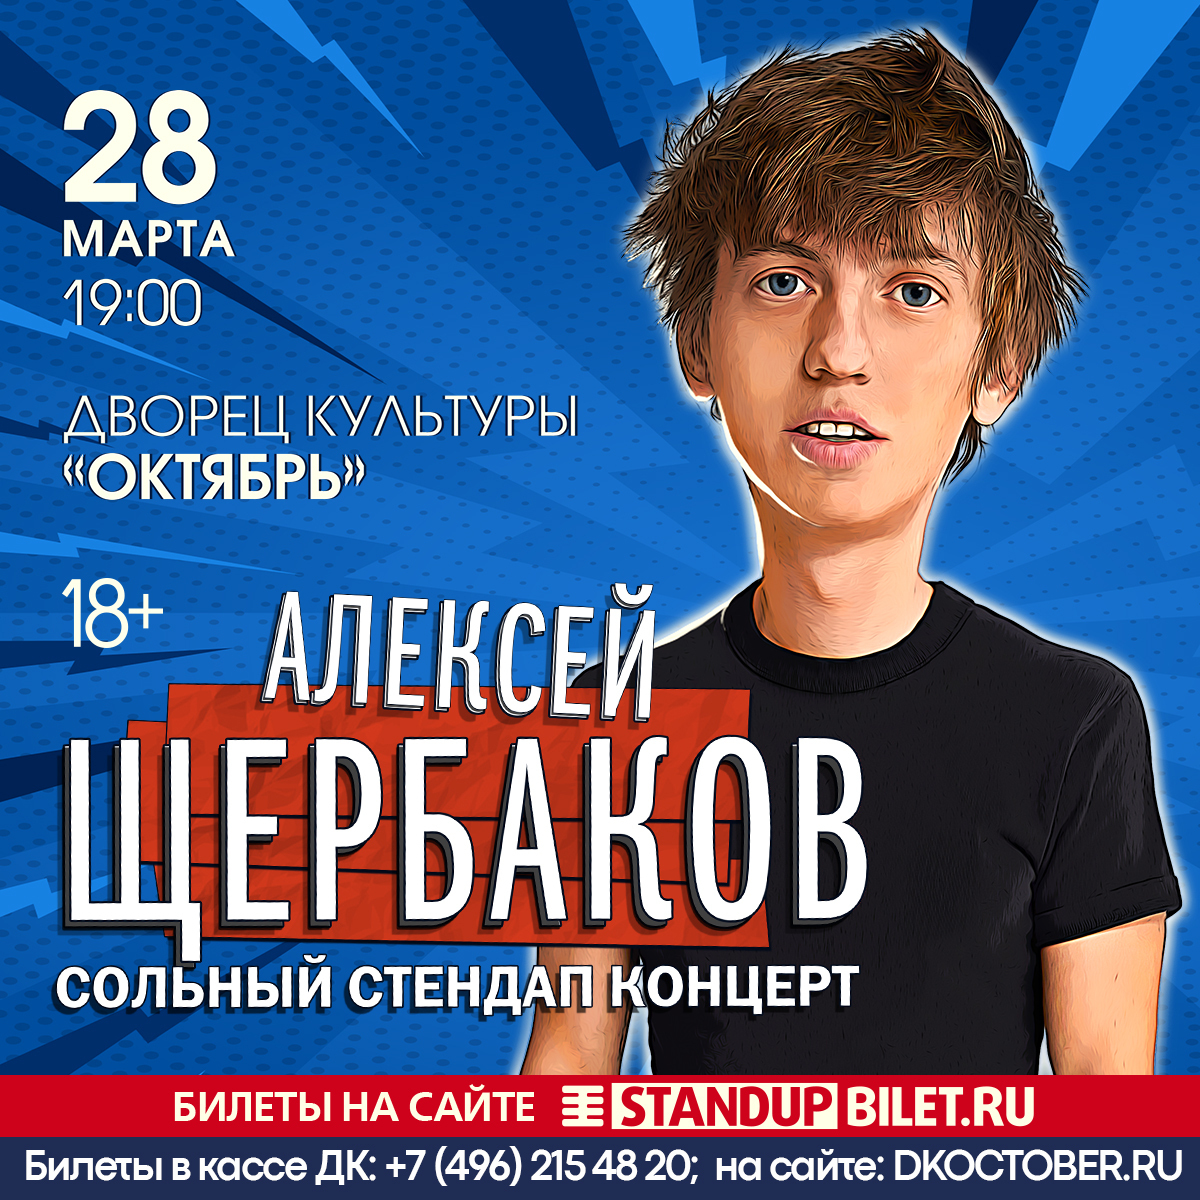 Концерт стендап-комика Алексея Щербакова